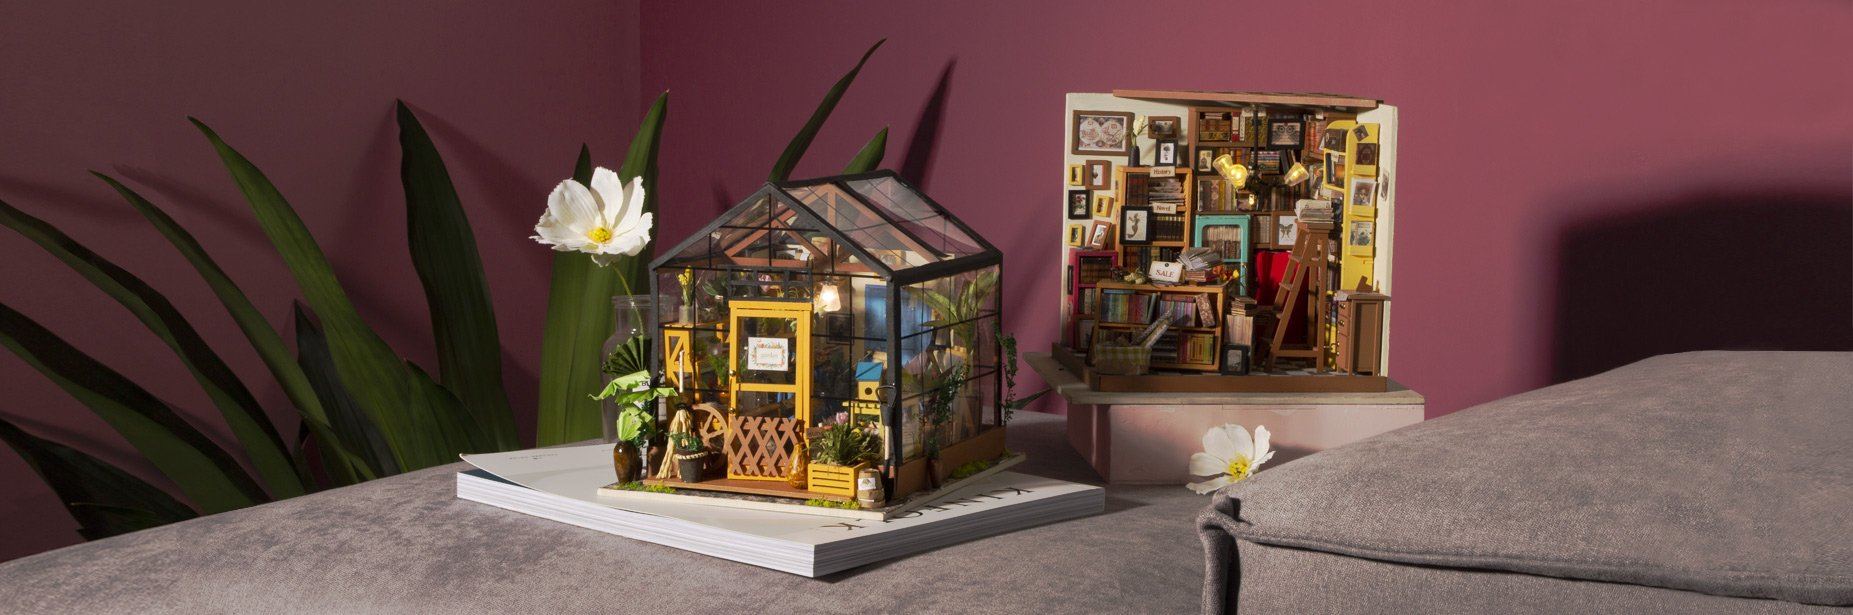 Cathy's Miniature Greenhouse